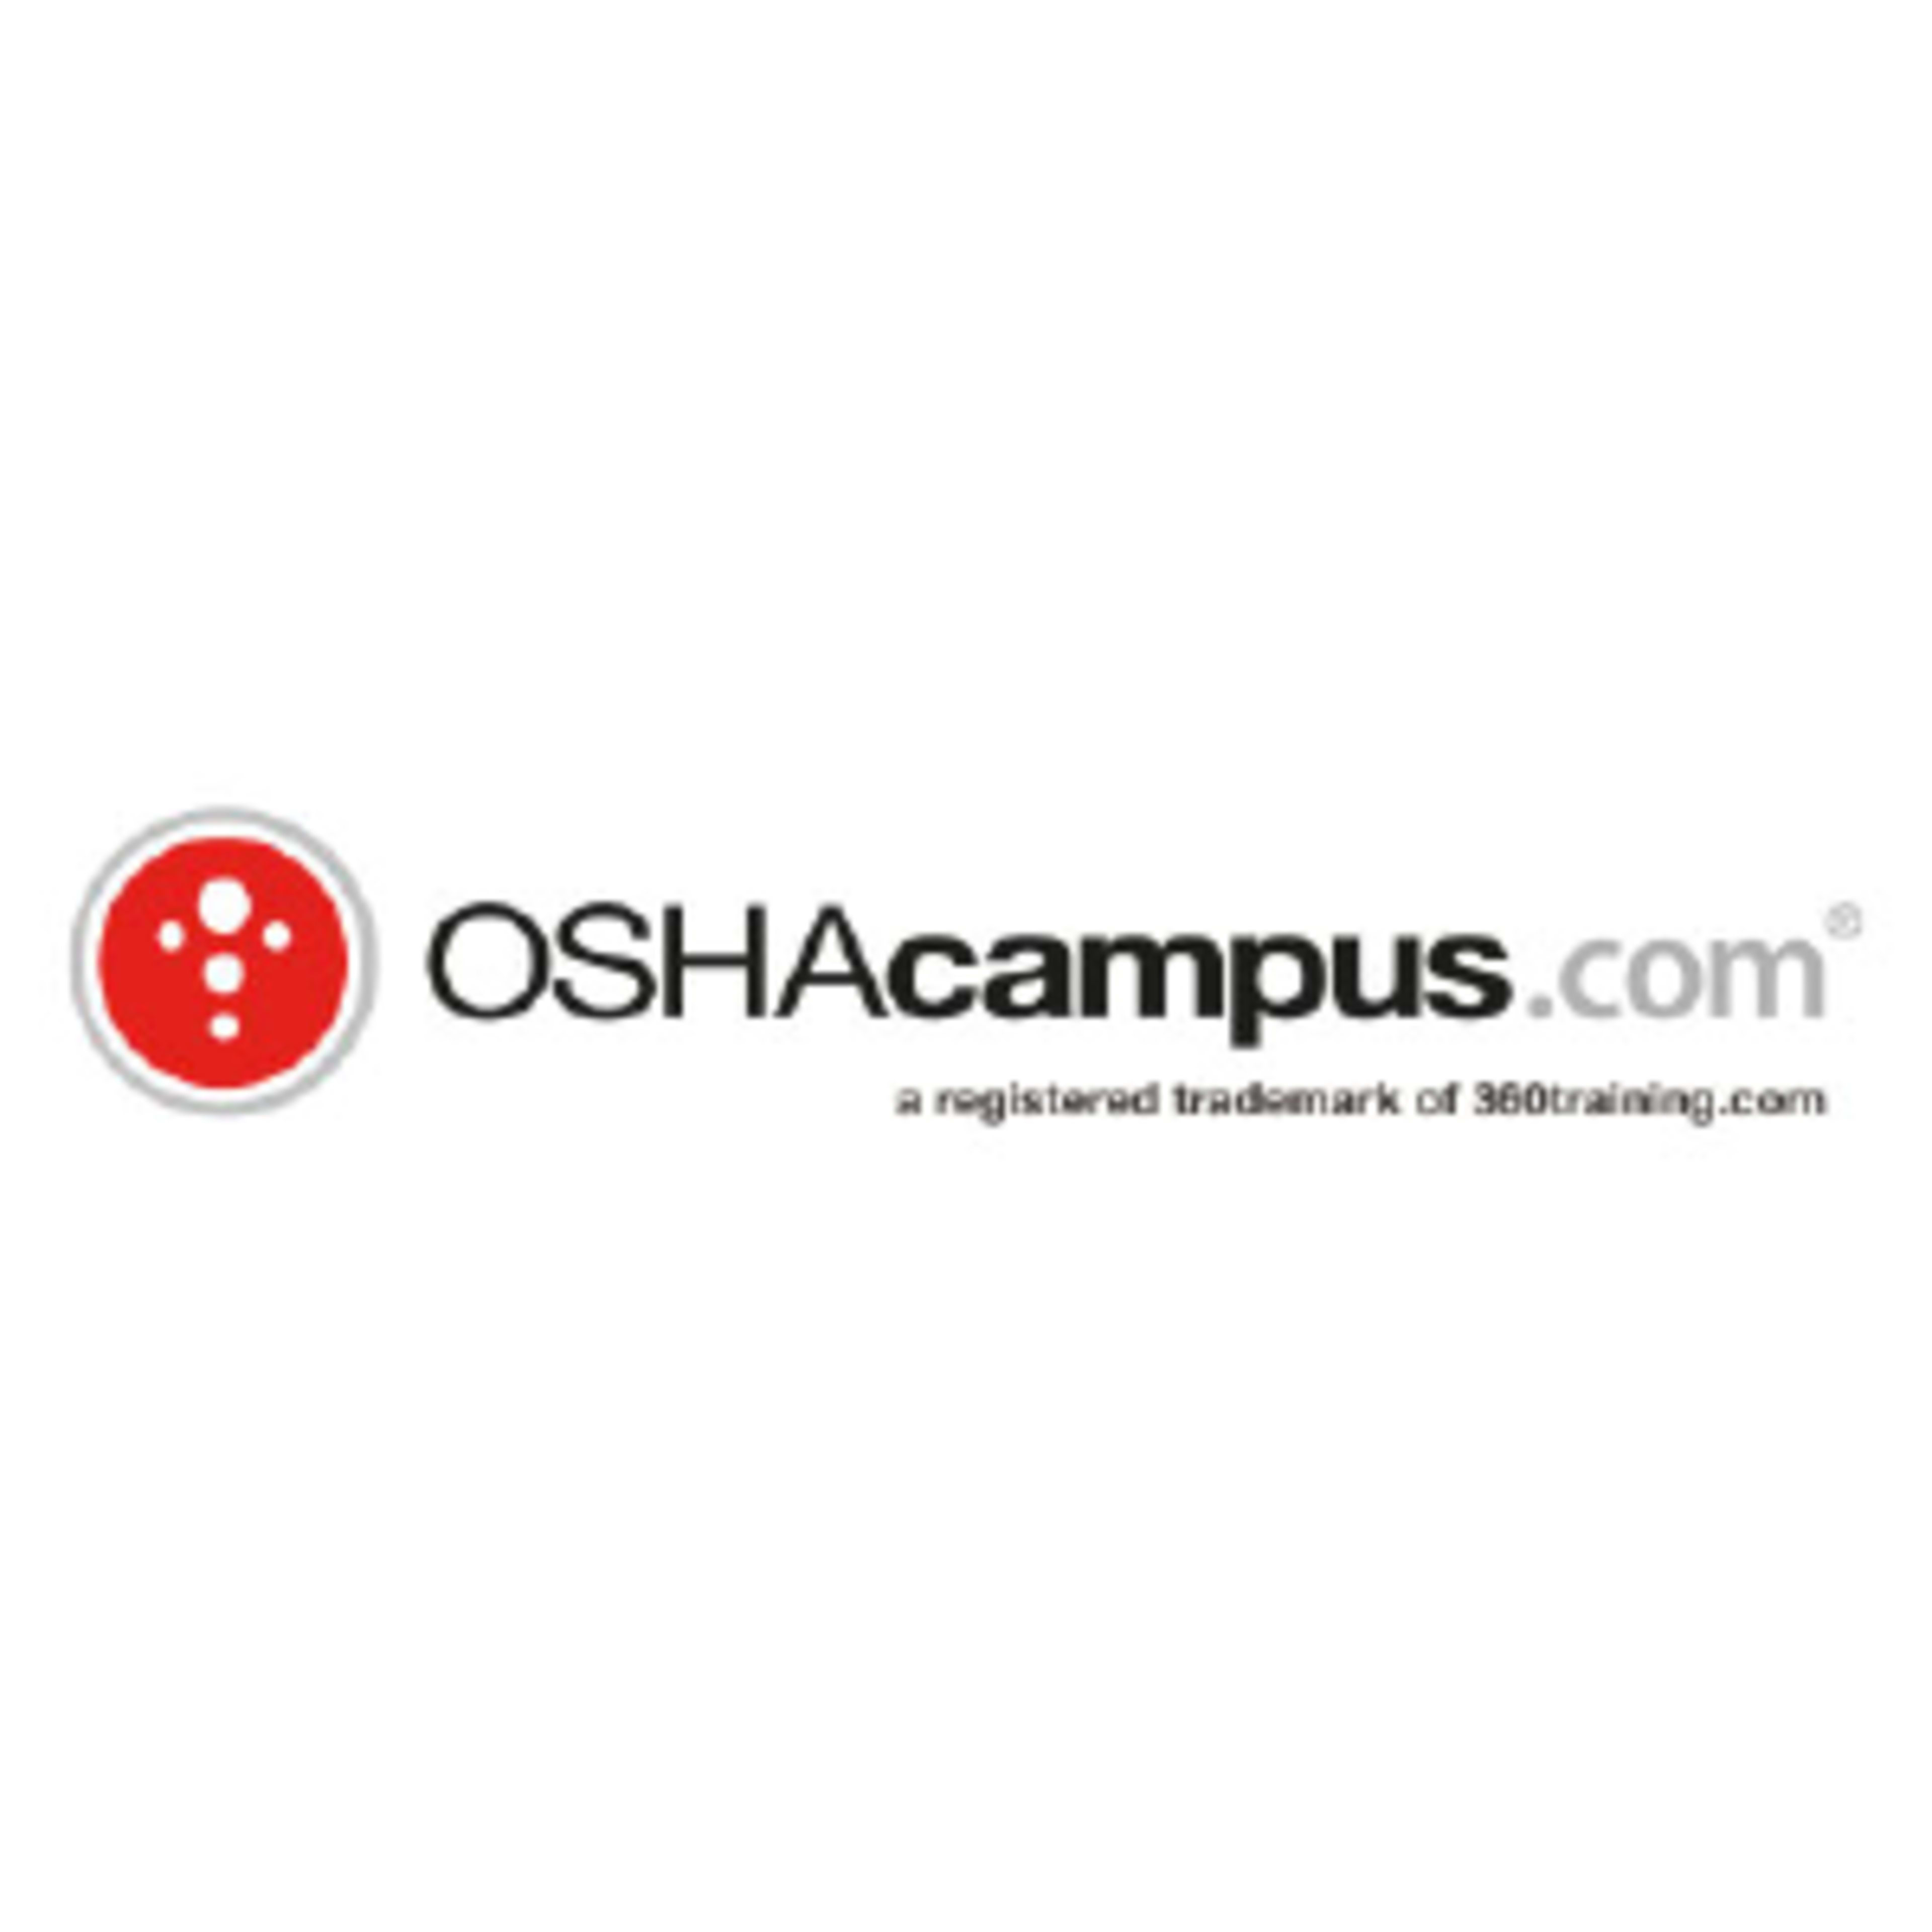 OSHAcampus.com Code